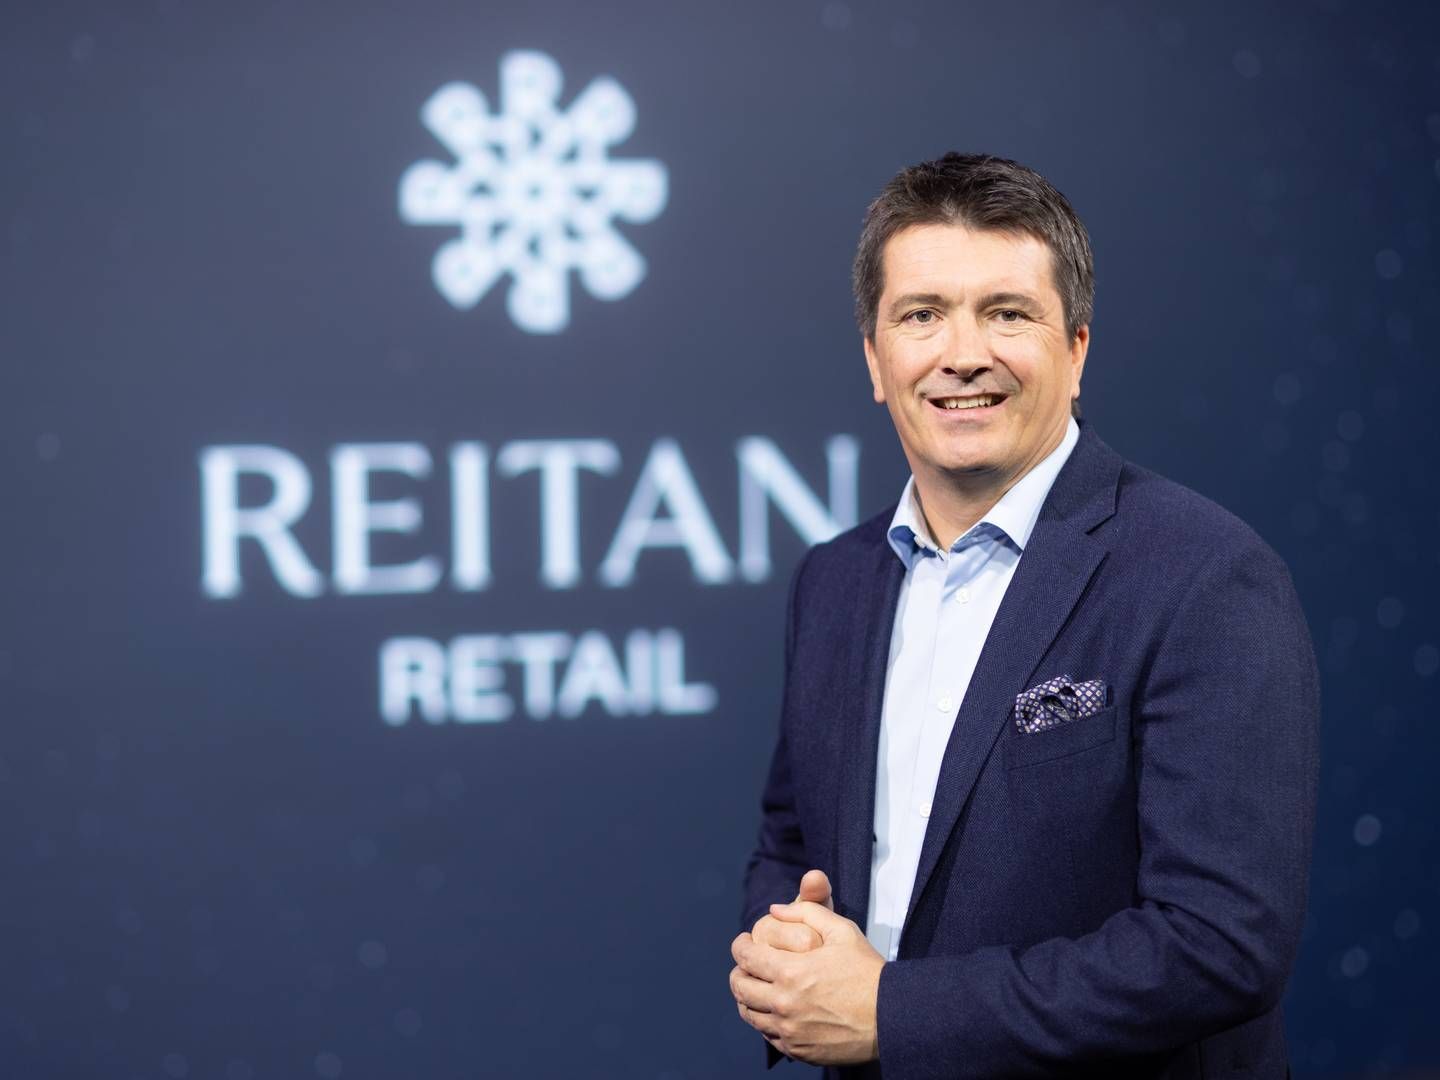 Ole Robert Reitan er søn af Retain-stifteren Odd Reitan og nuværende topchef i koncernen. | Foto: Øyvind Breivik